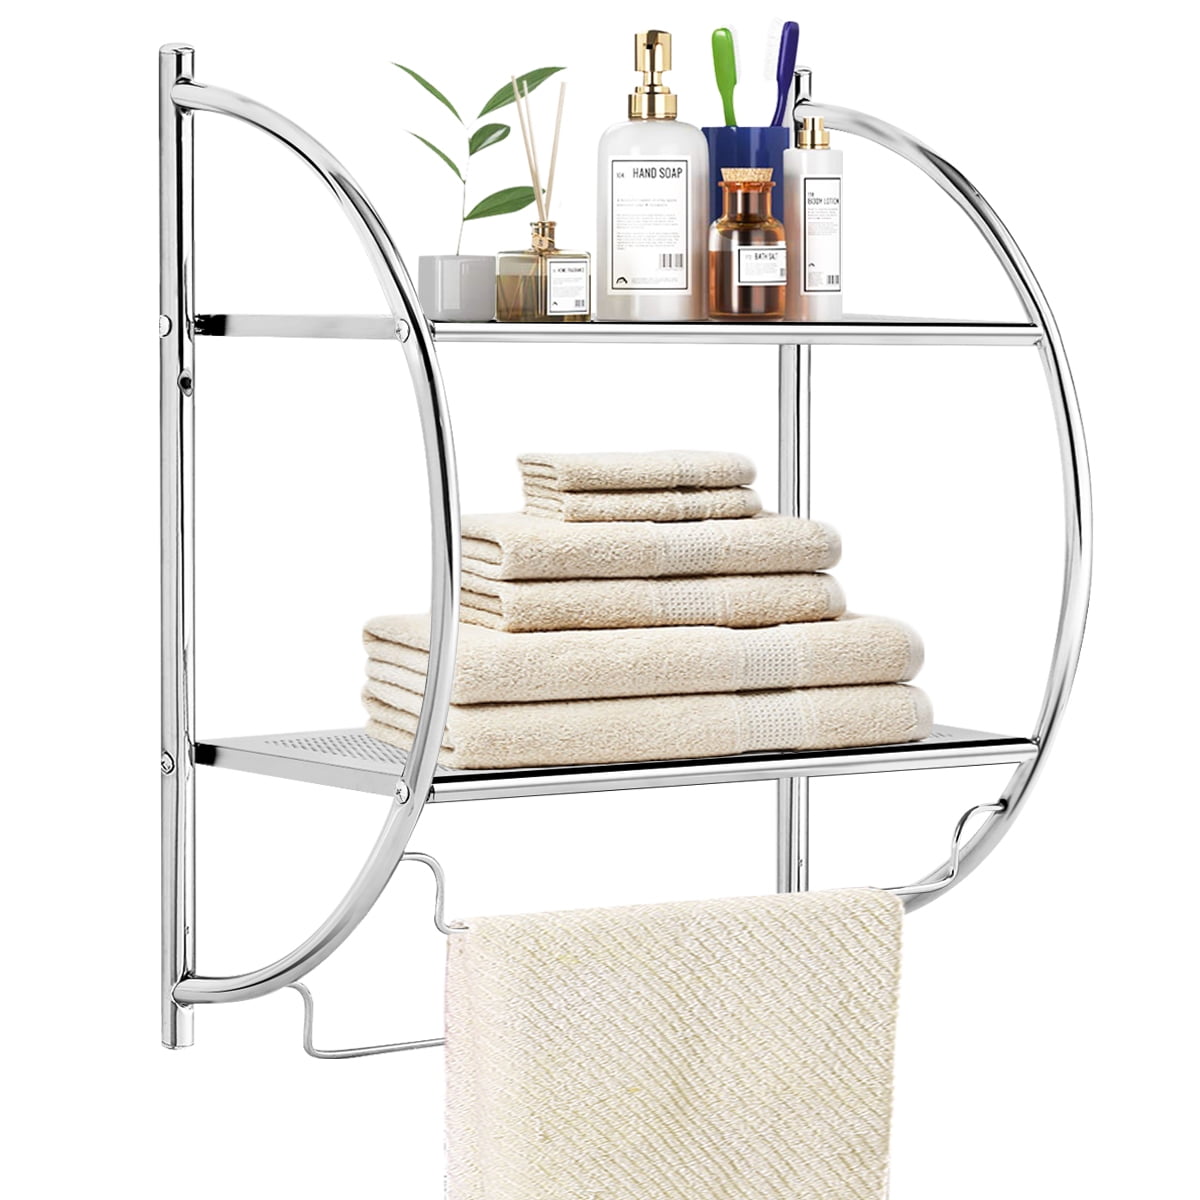 2 Layer Bathroom Towel Organizer Holder Rack Hook Aluminum Shower Storage Shelf